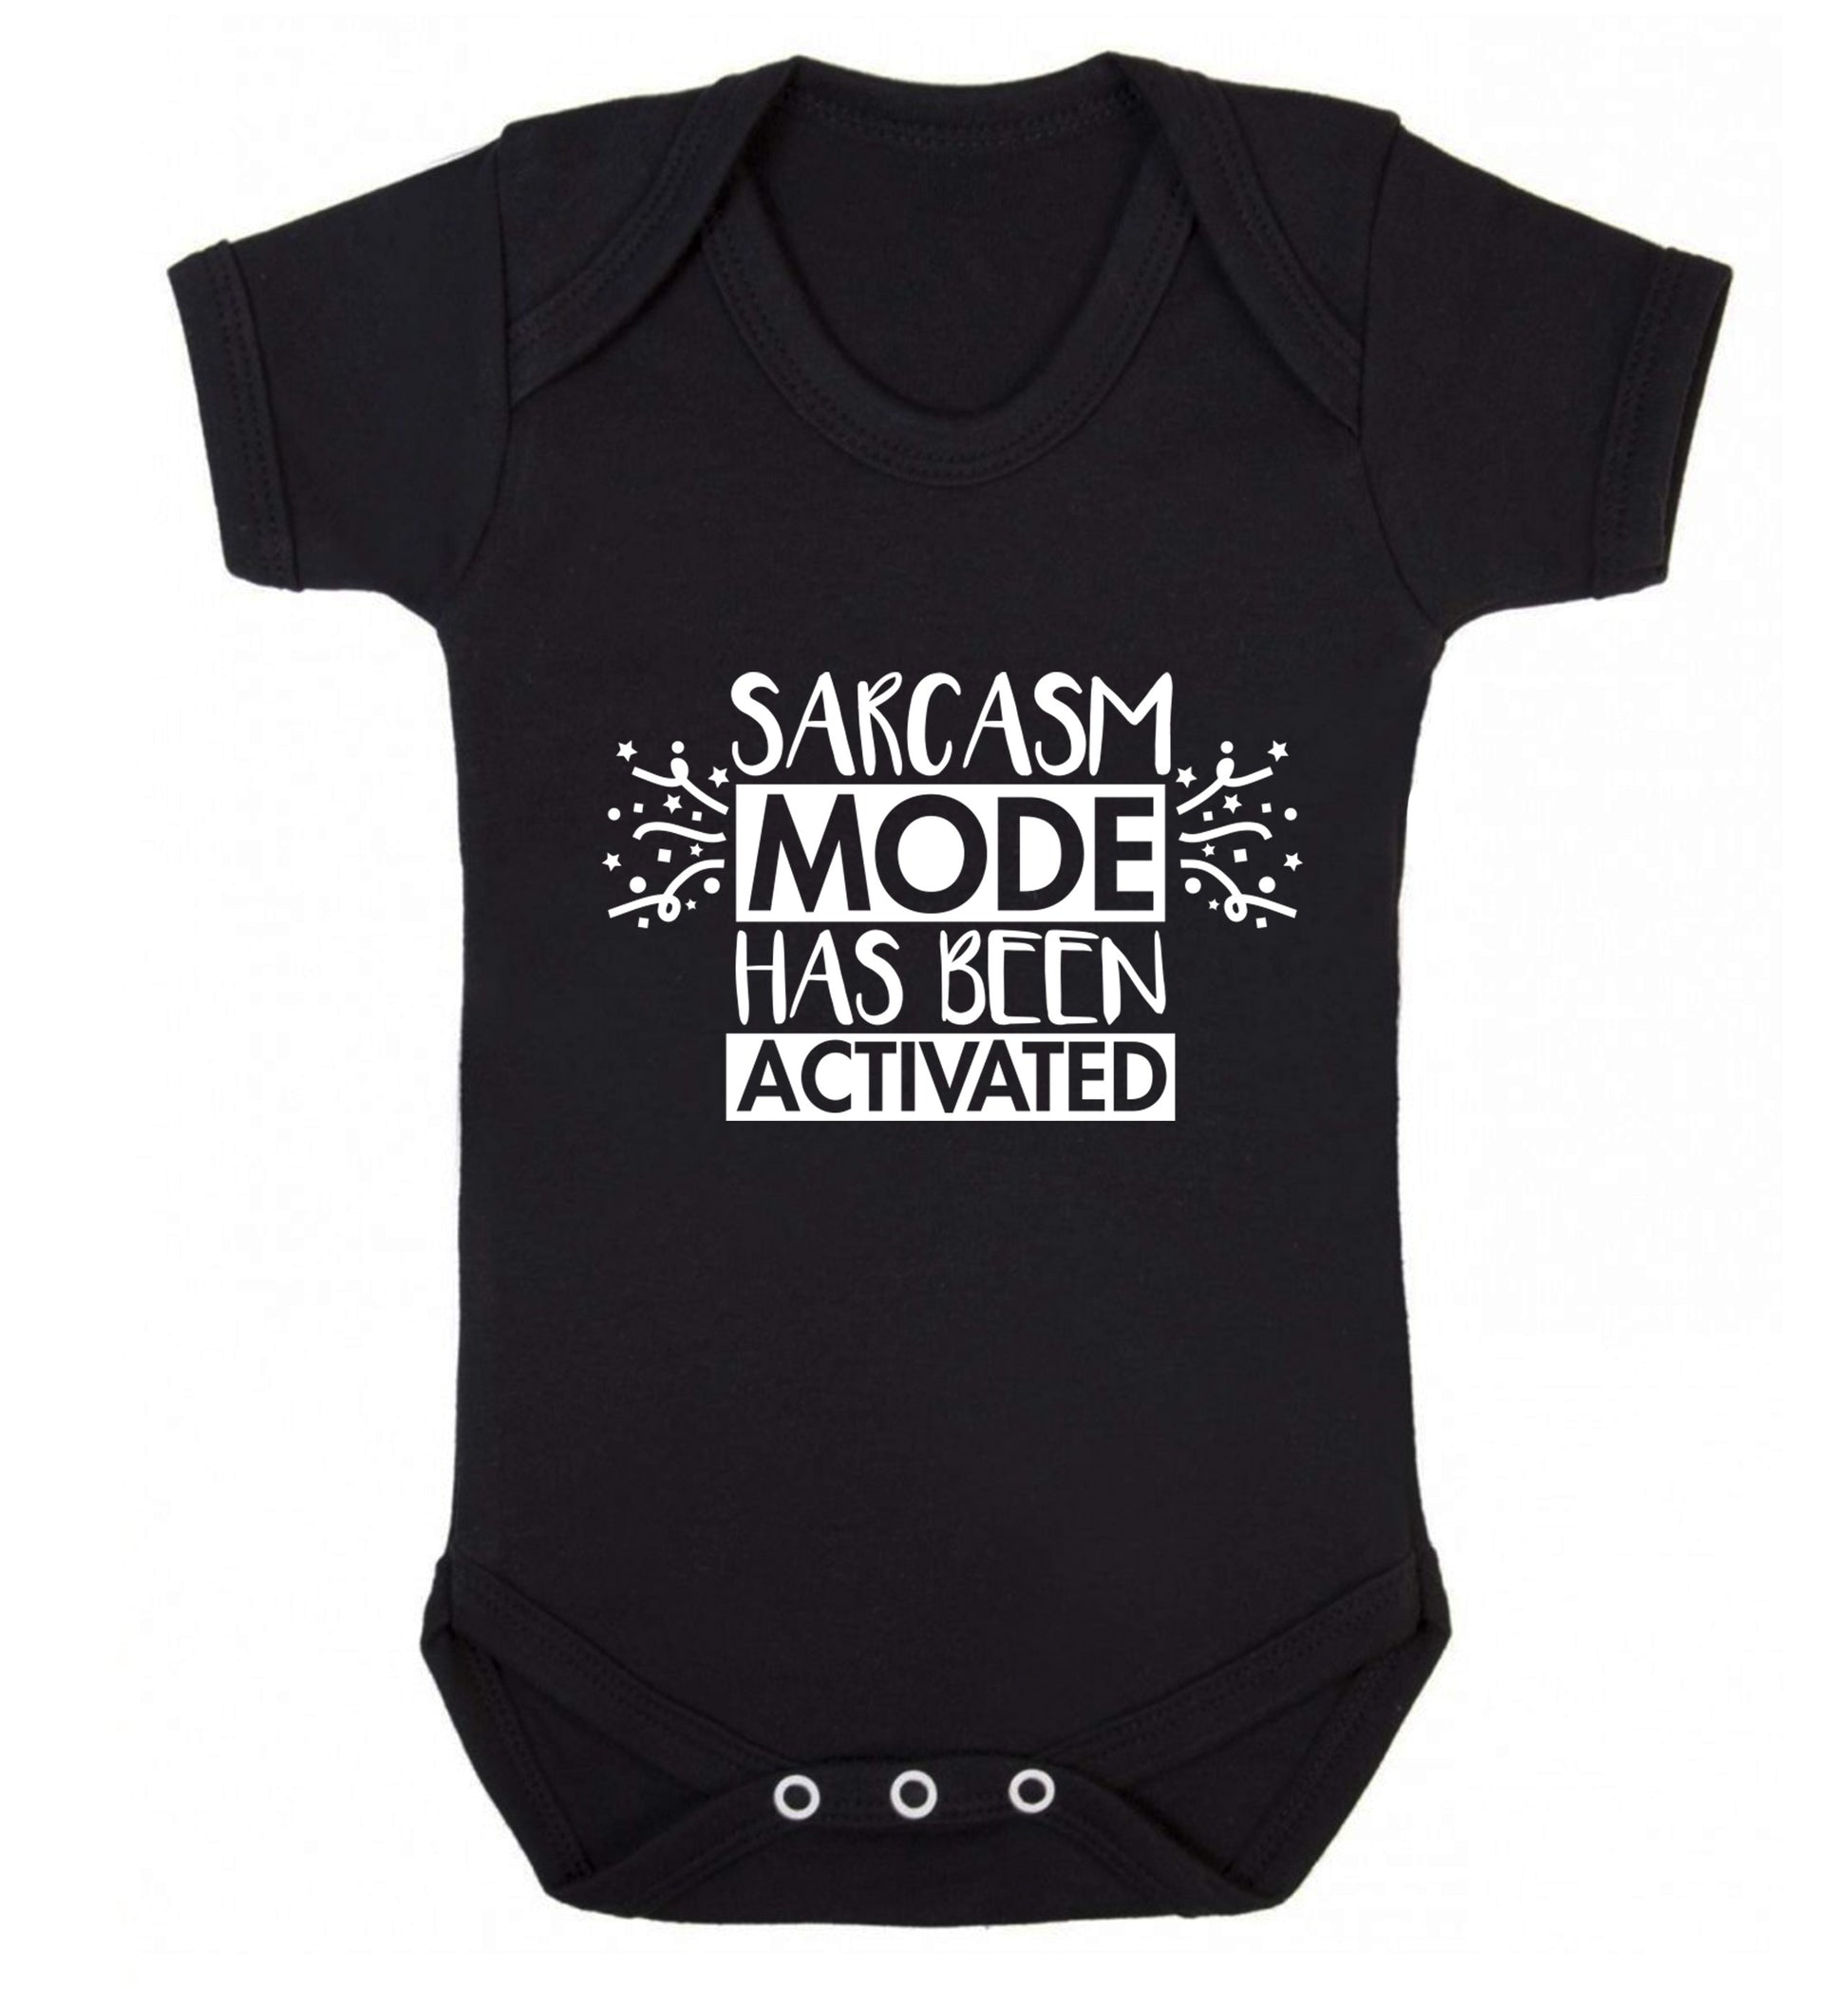 Sarcarsm mode has been activated Baby Vest black 18-24 months